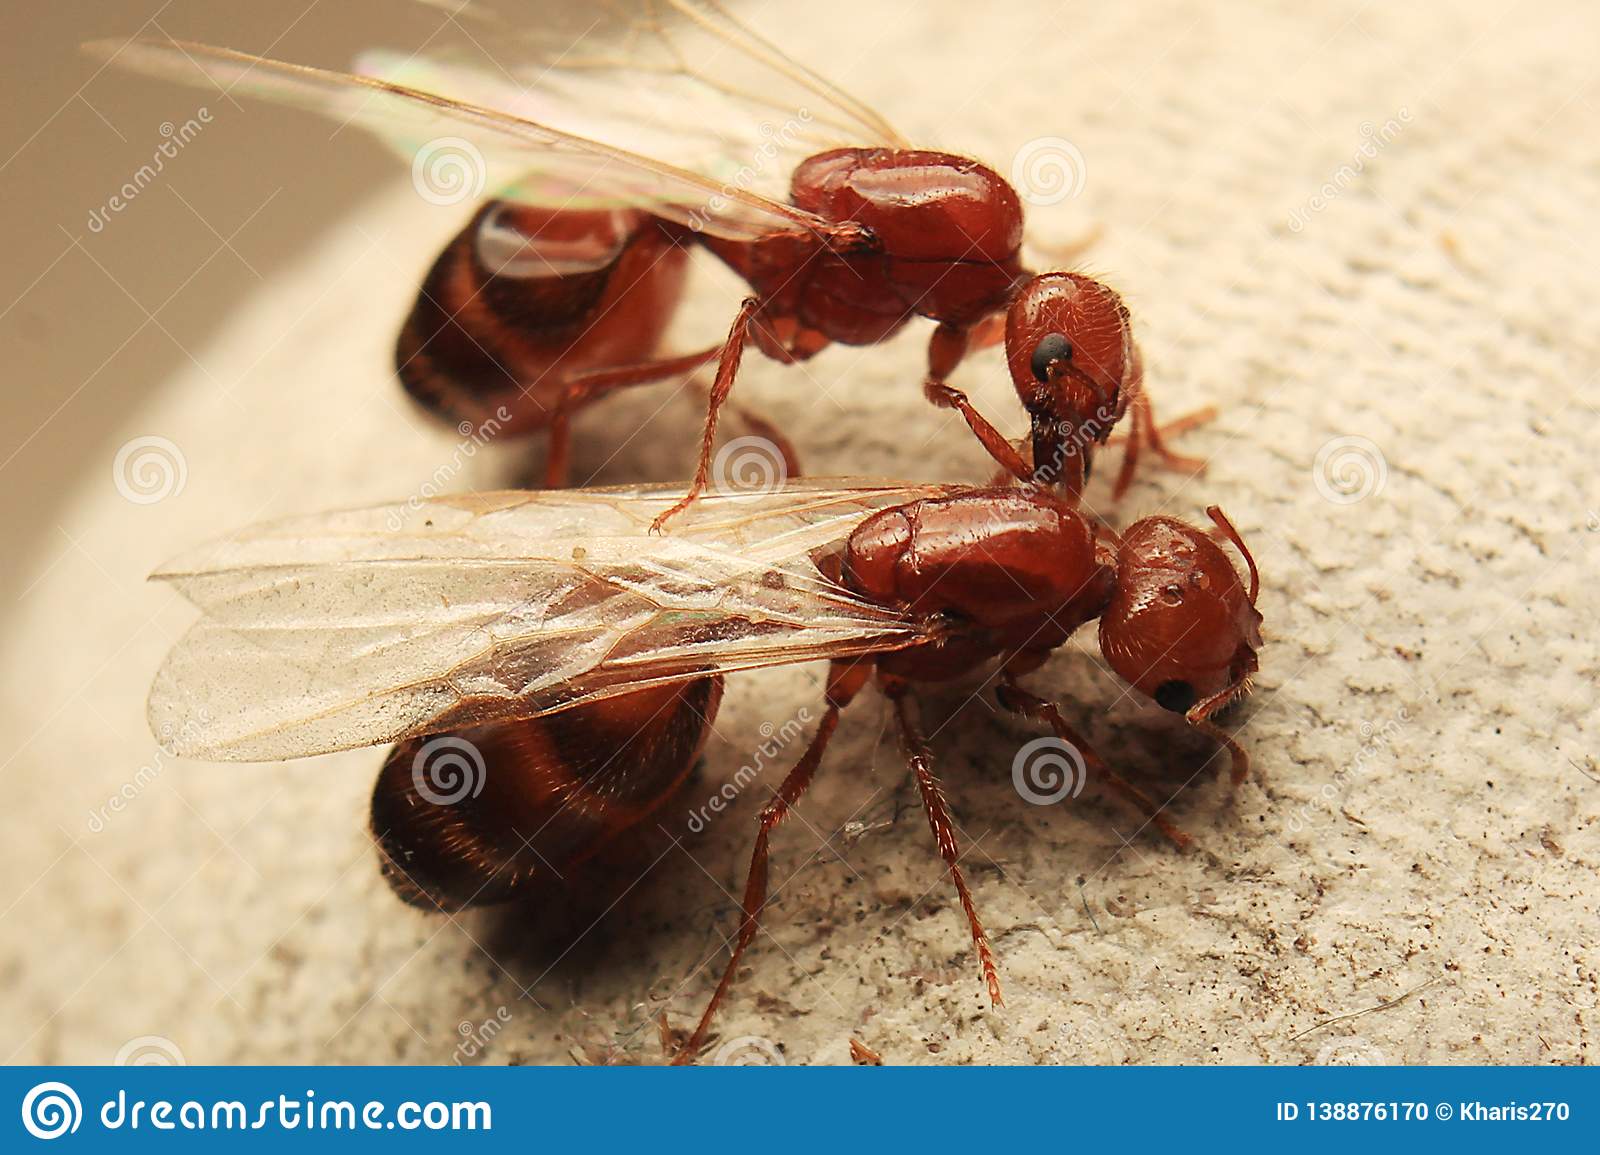 Ant Queen Pictures